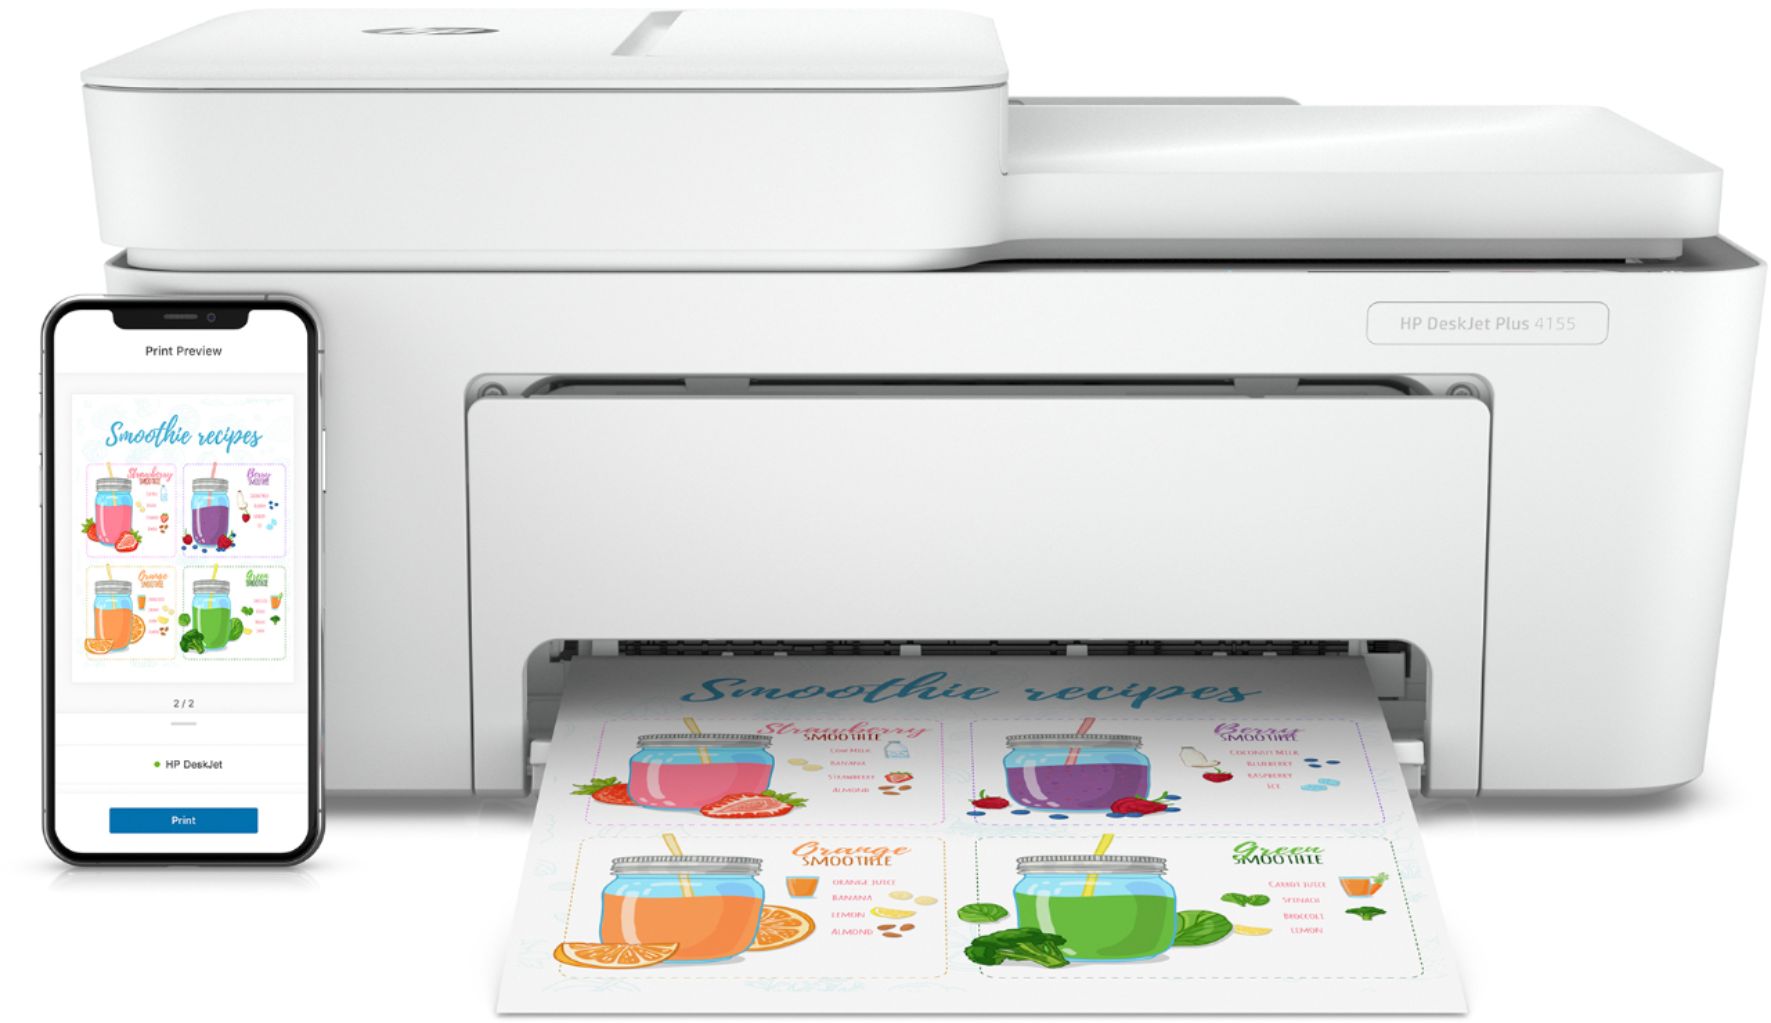 HP DeskJet Plus 4152 Wireless All-in-One Color Inkjet Printer